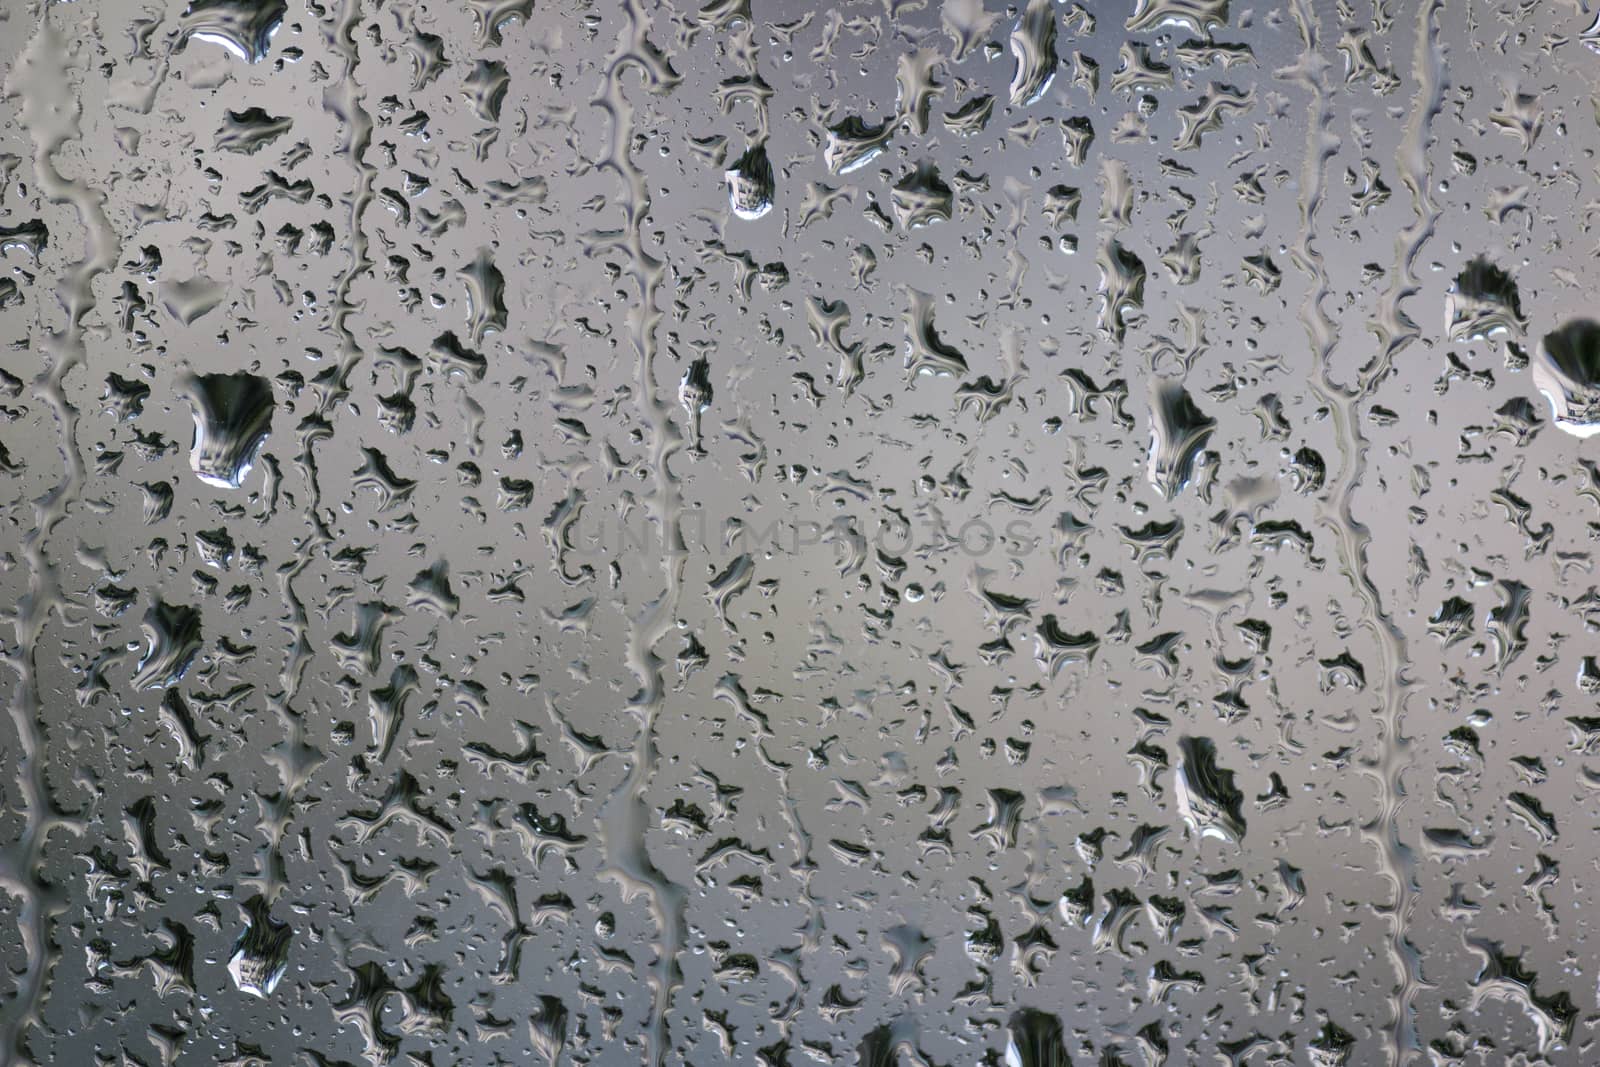 Close up-rain drops on a windows